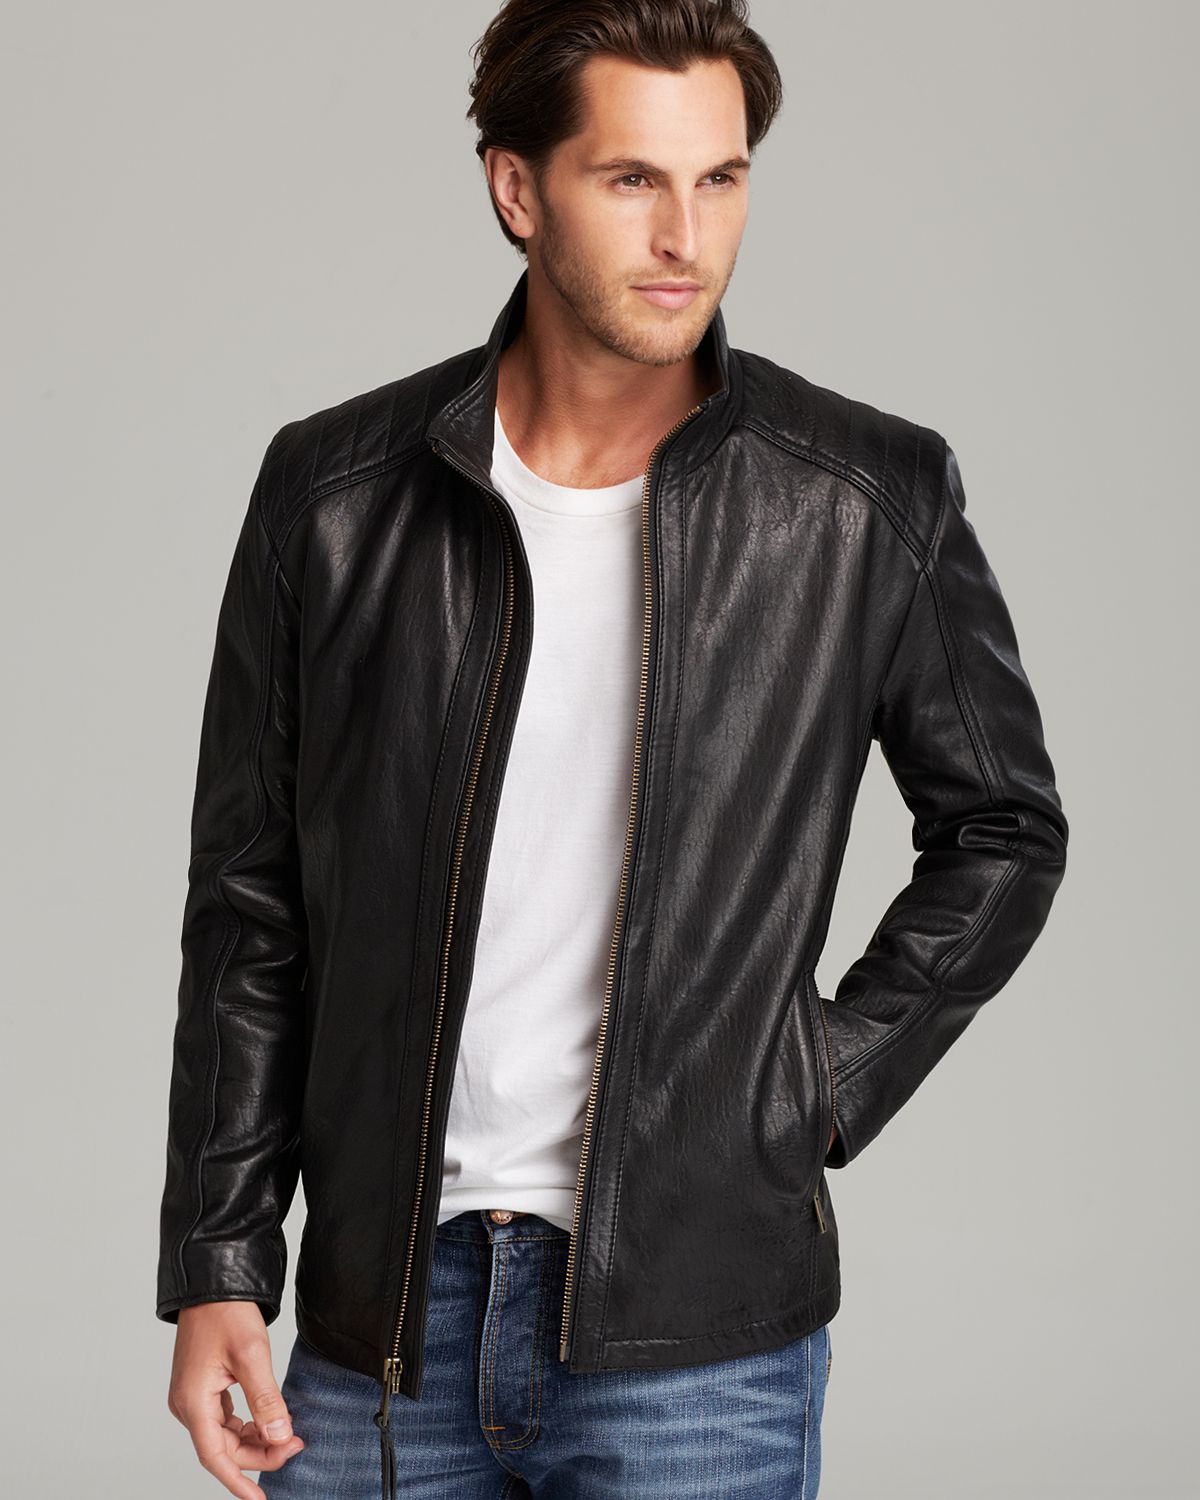 Lyst - Marc New York Quilted Shoulder Leather Jacket in Black for Men